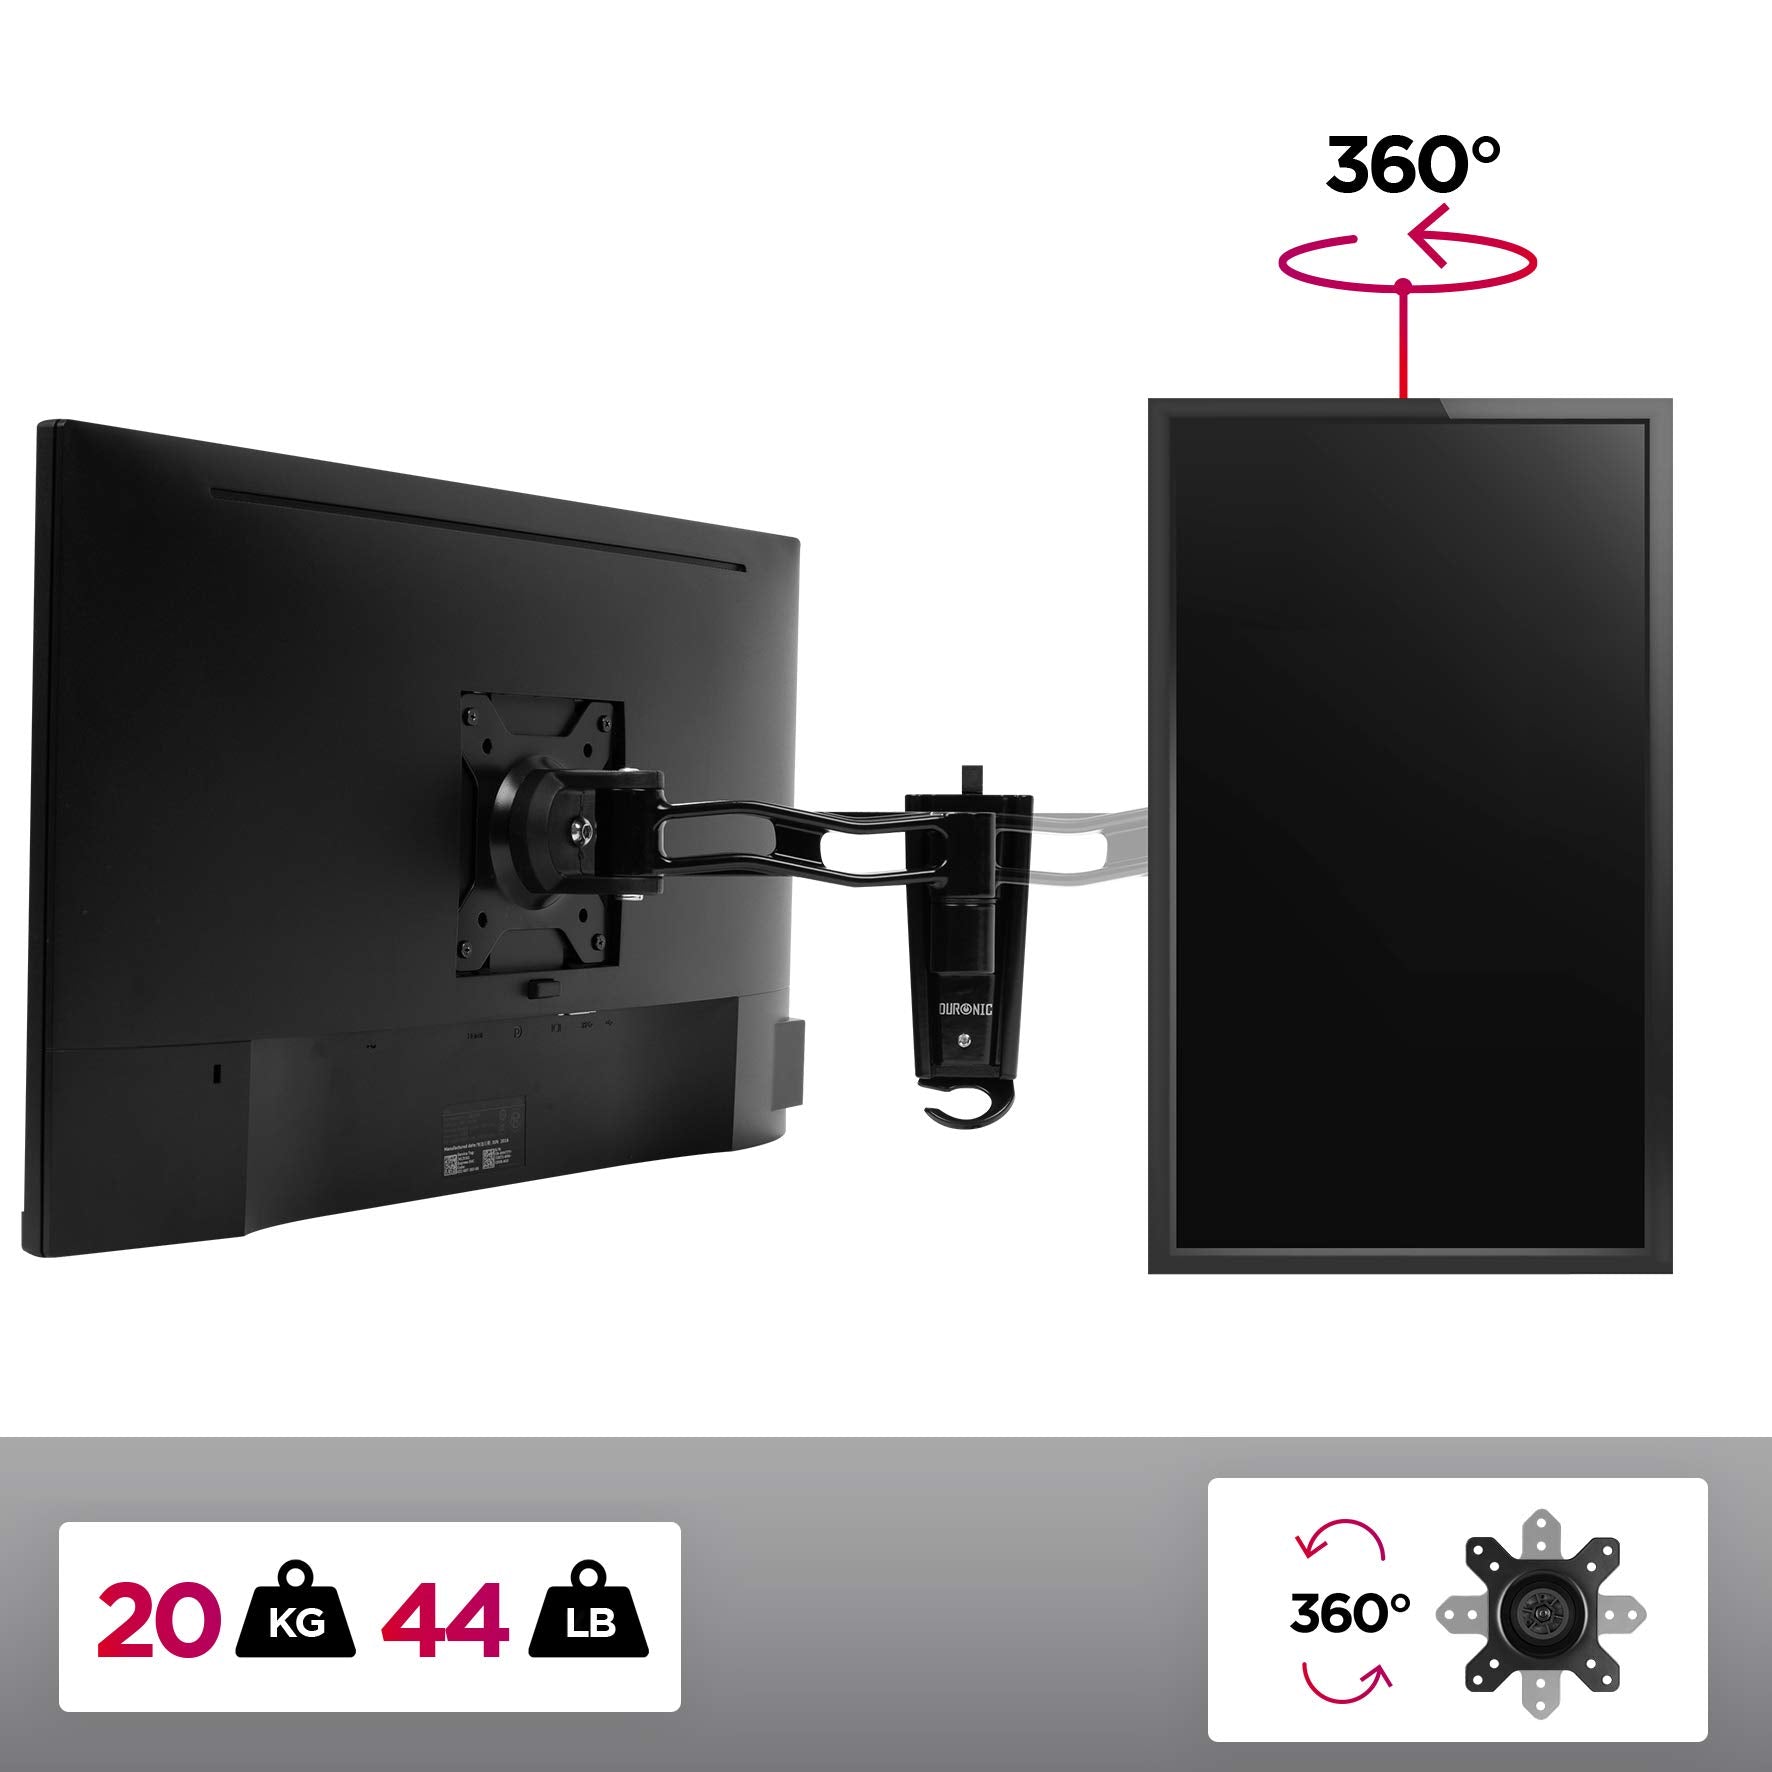 Duronic DM35W1X2 Soporte TV de pared brazo para 1 monitor PC Pantalla LCD LED de 13